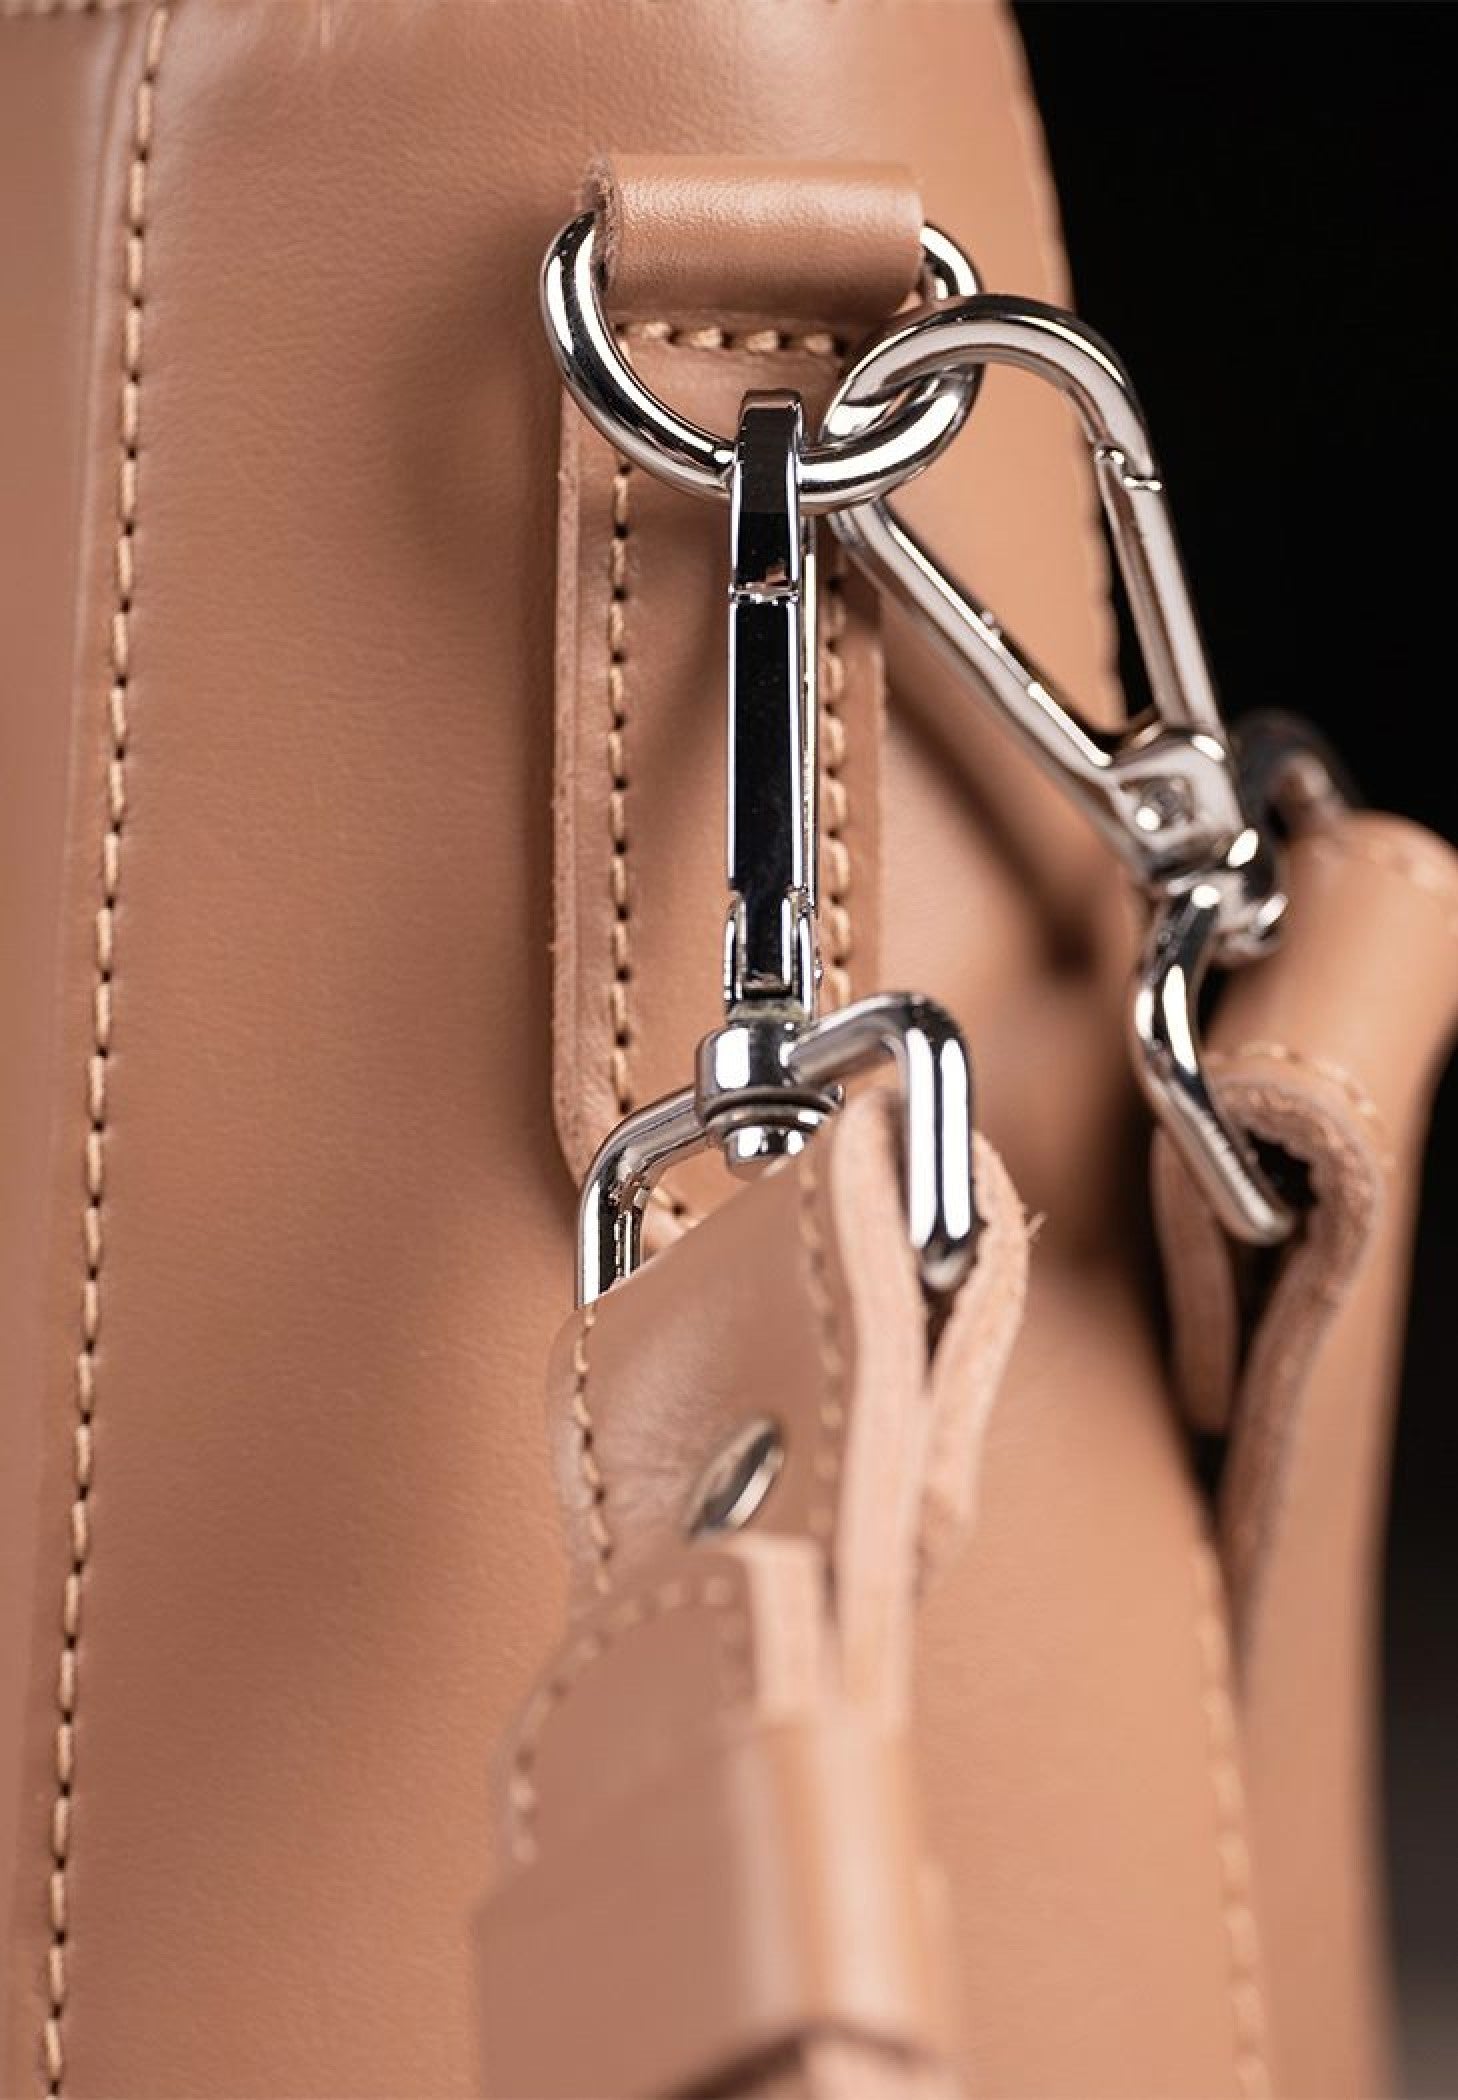  Women's handbag in leather color caramel.